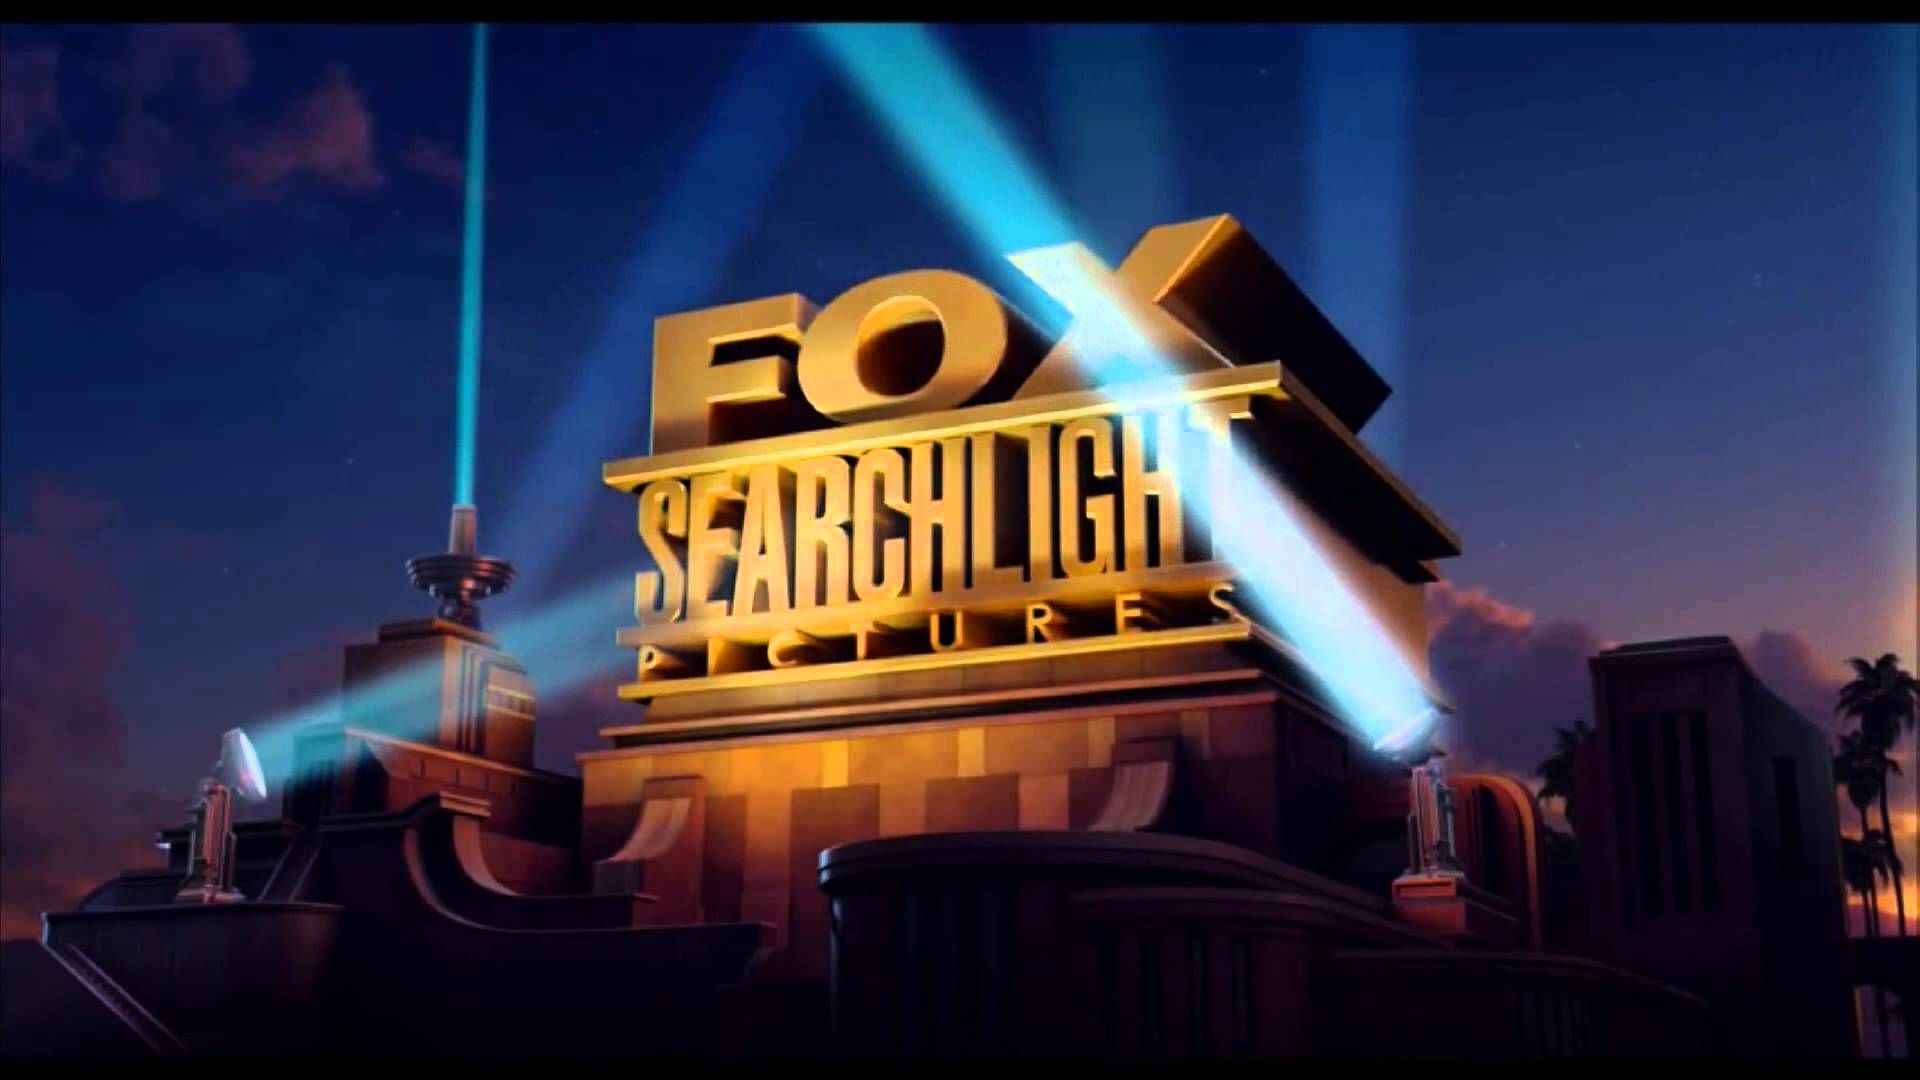 FOX Searchlight